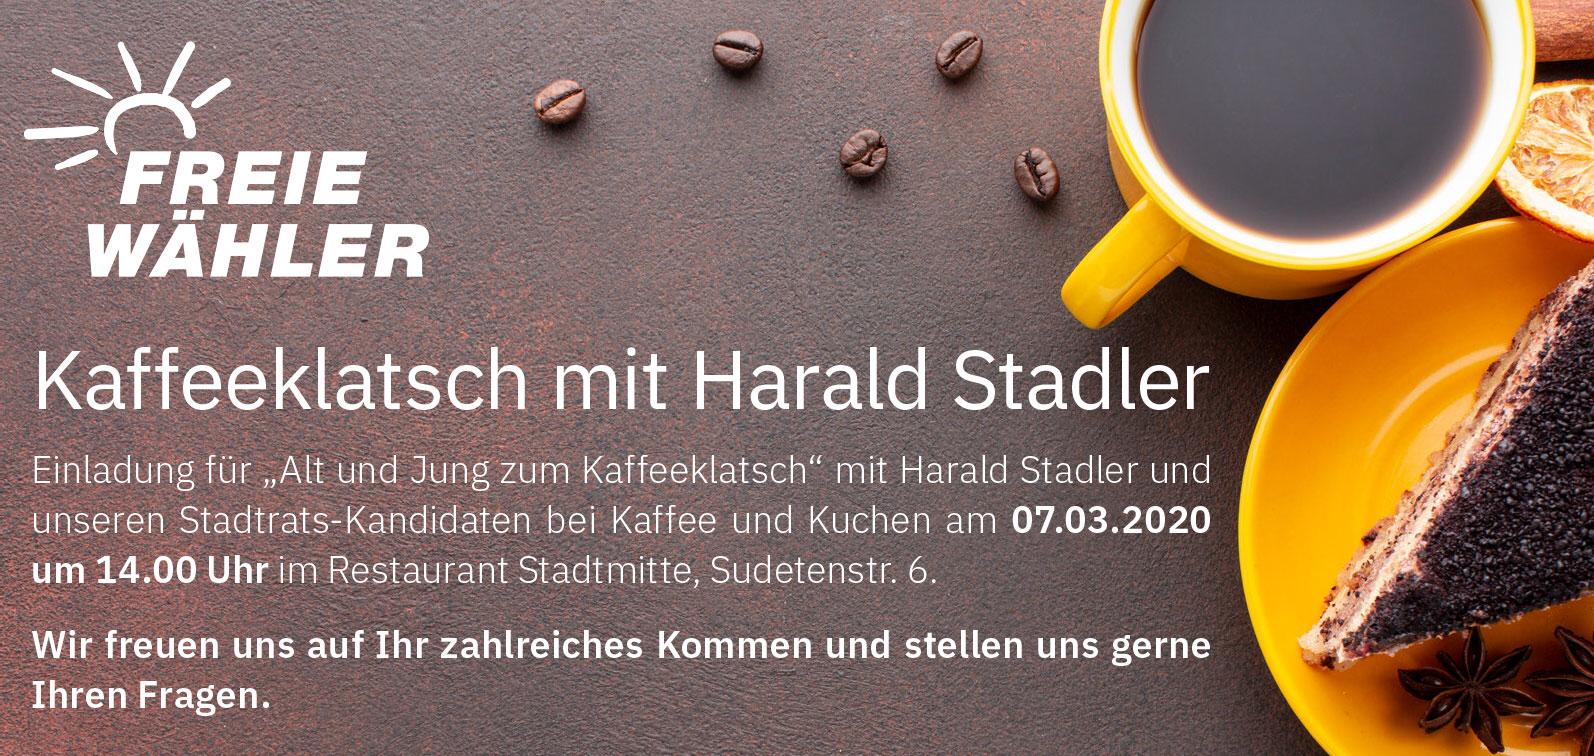 Kaffeeklatsch mit Harald Stadler